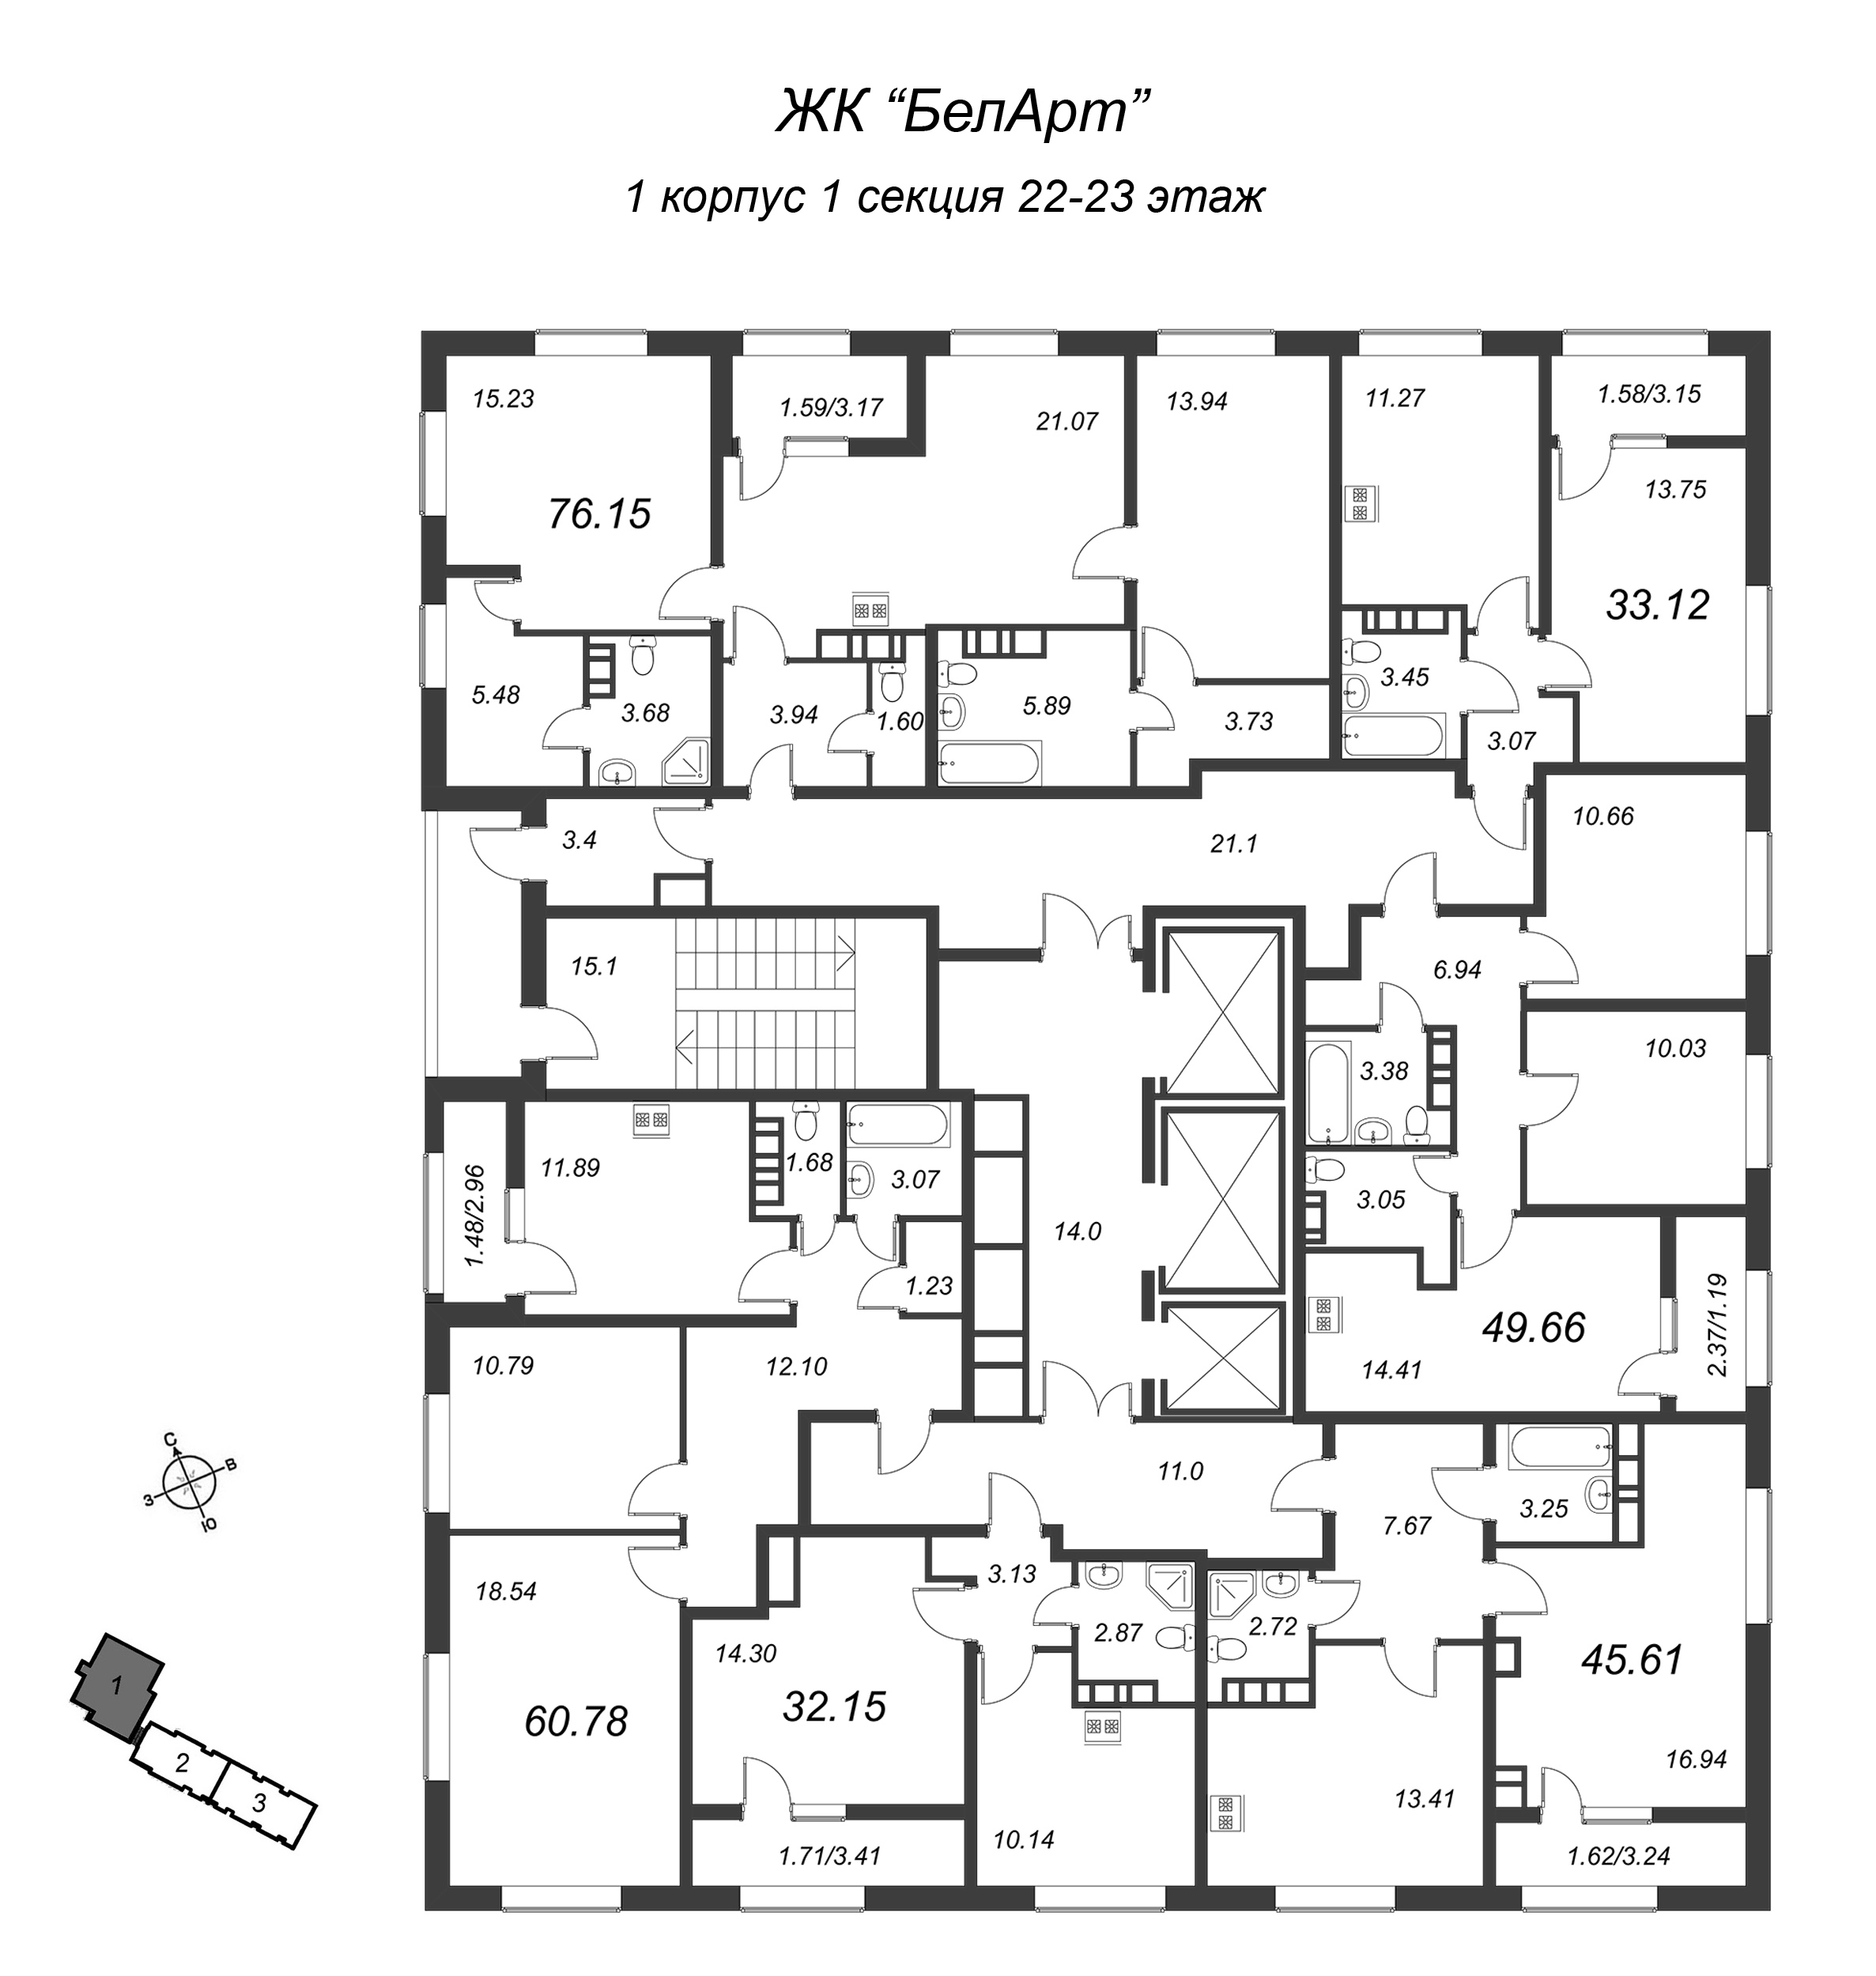 2-комнатная квартира, 60.6 м² в ЖК "БелАрт" - планировка этажа